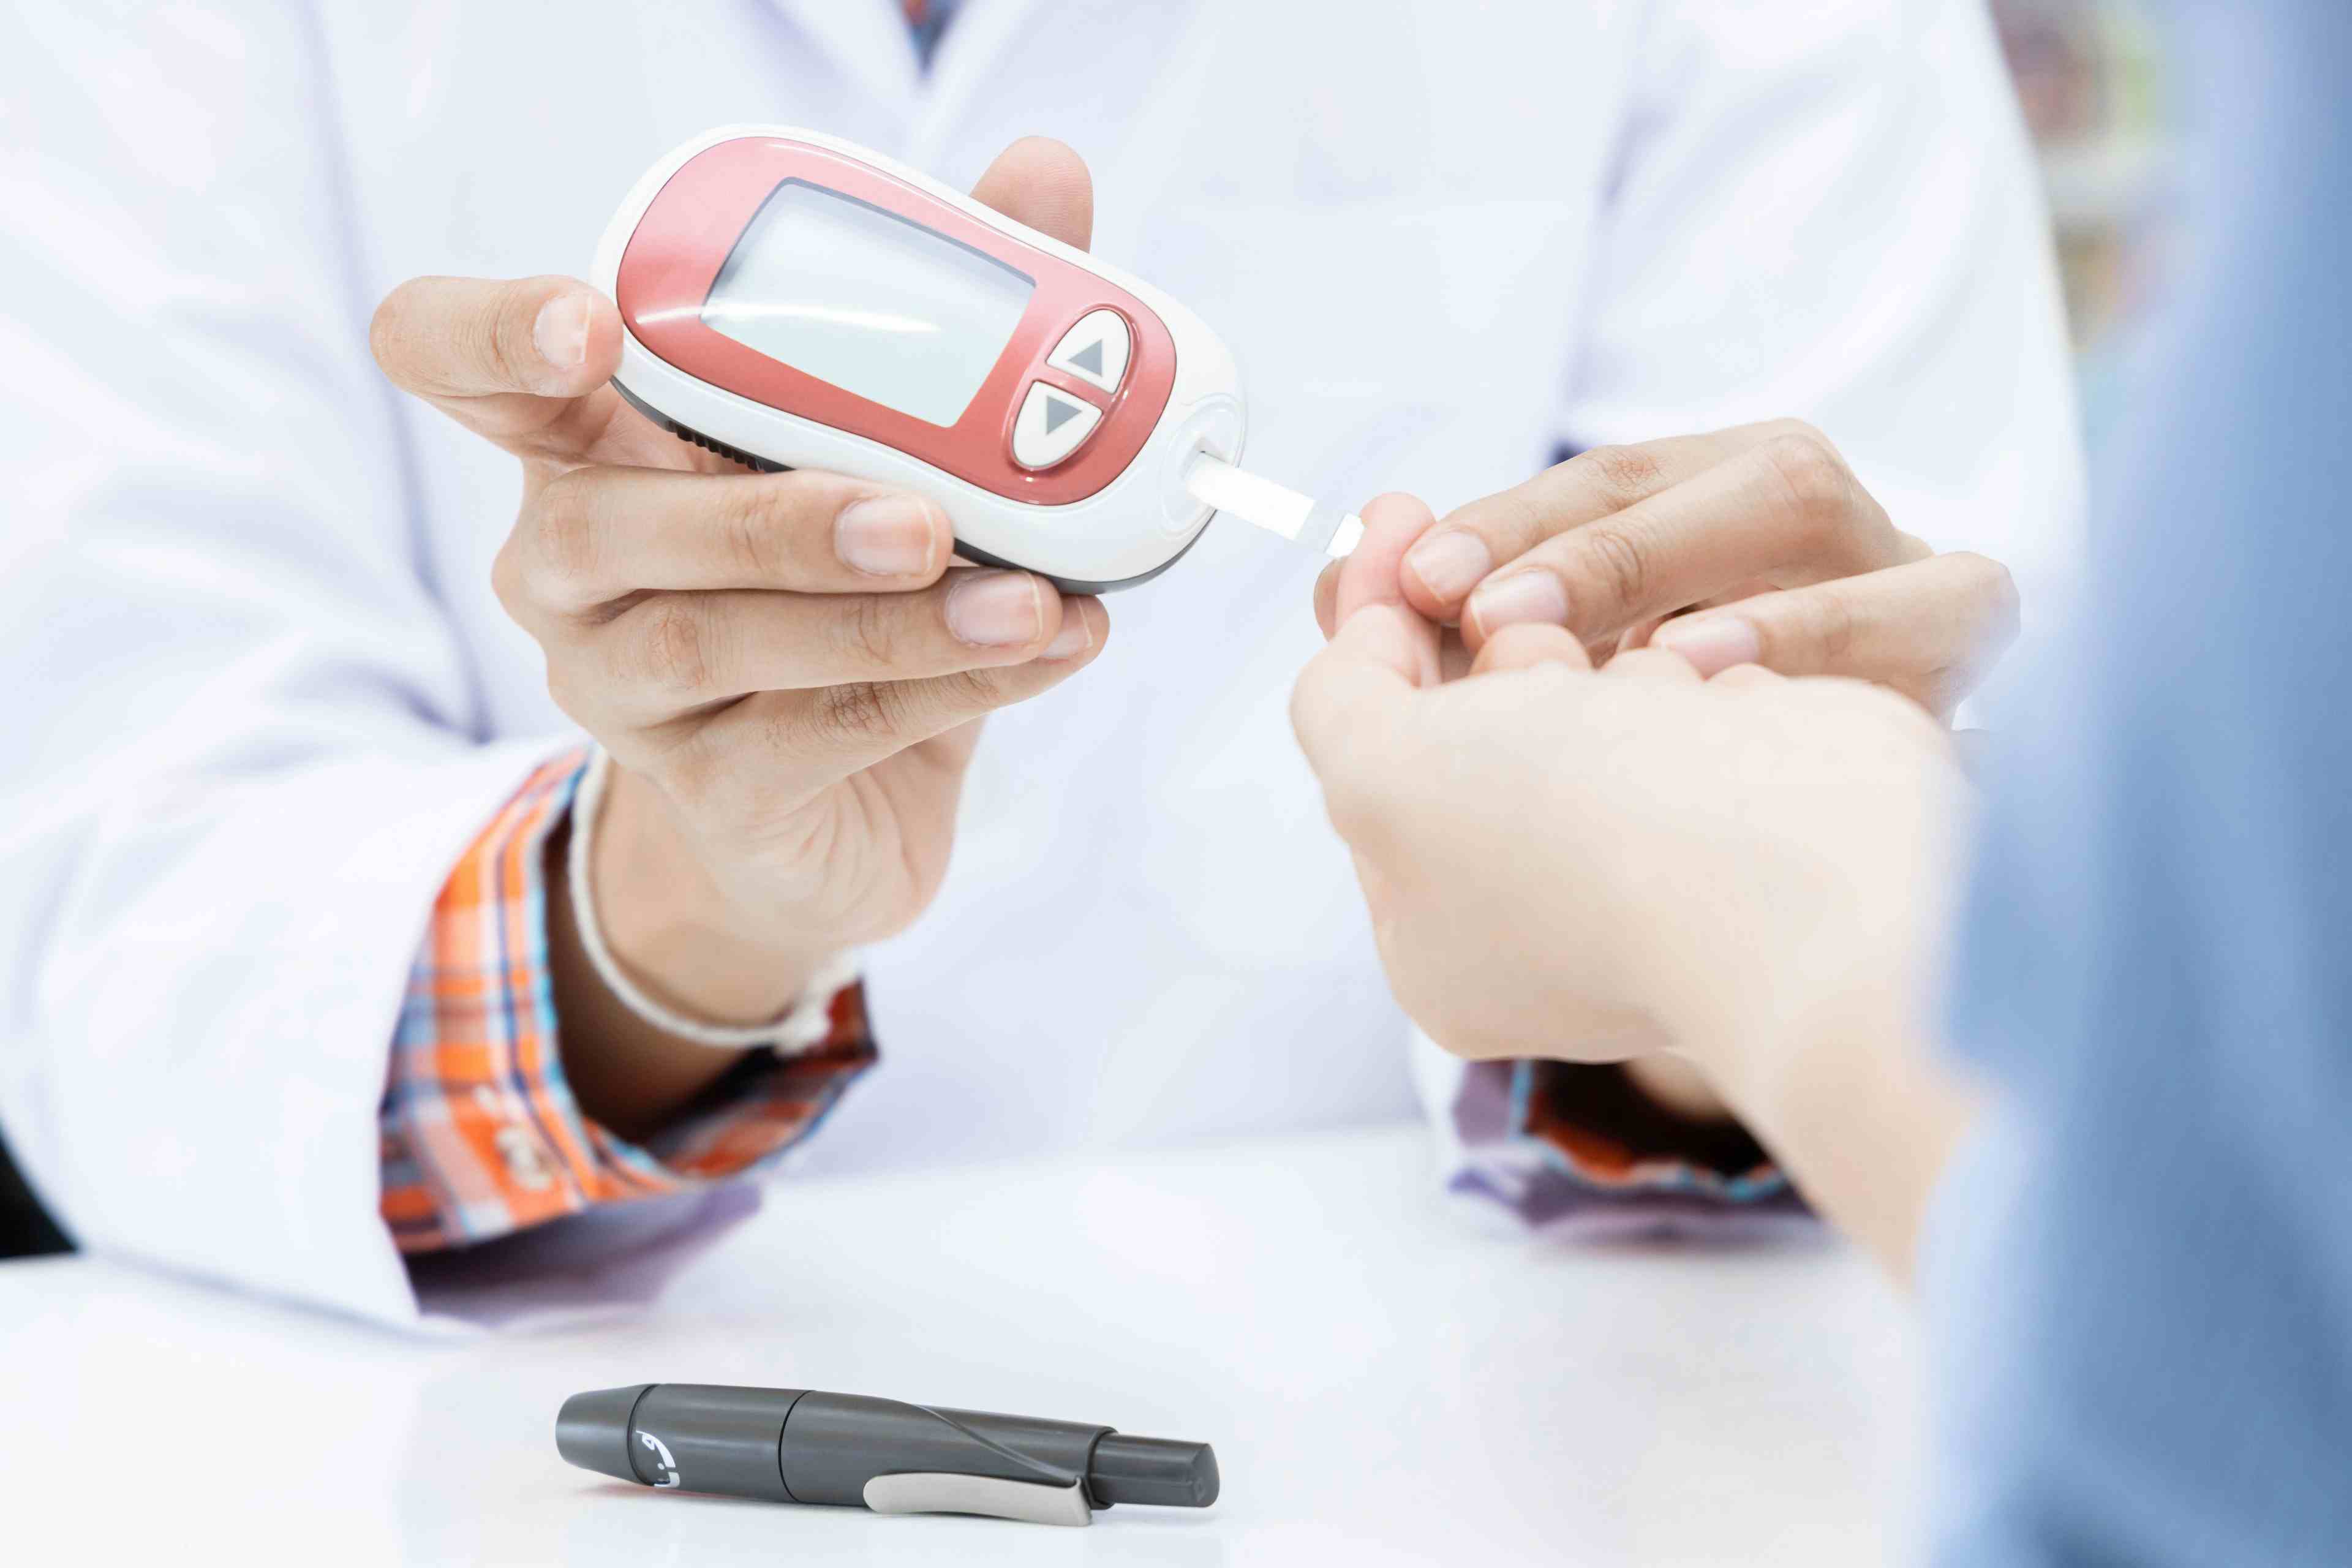 Pharmacist helping patient use glucose monitor -- Image credit: Kalyakan | stock.adobe.com